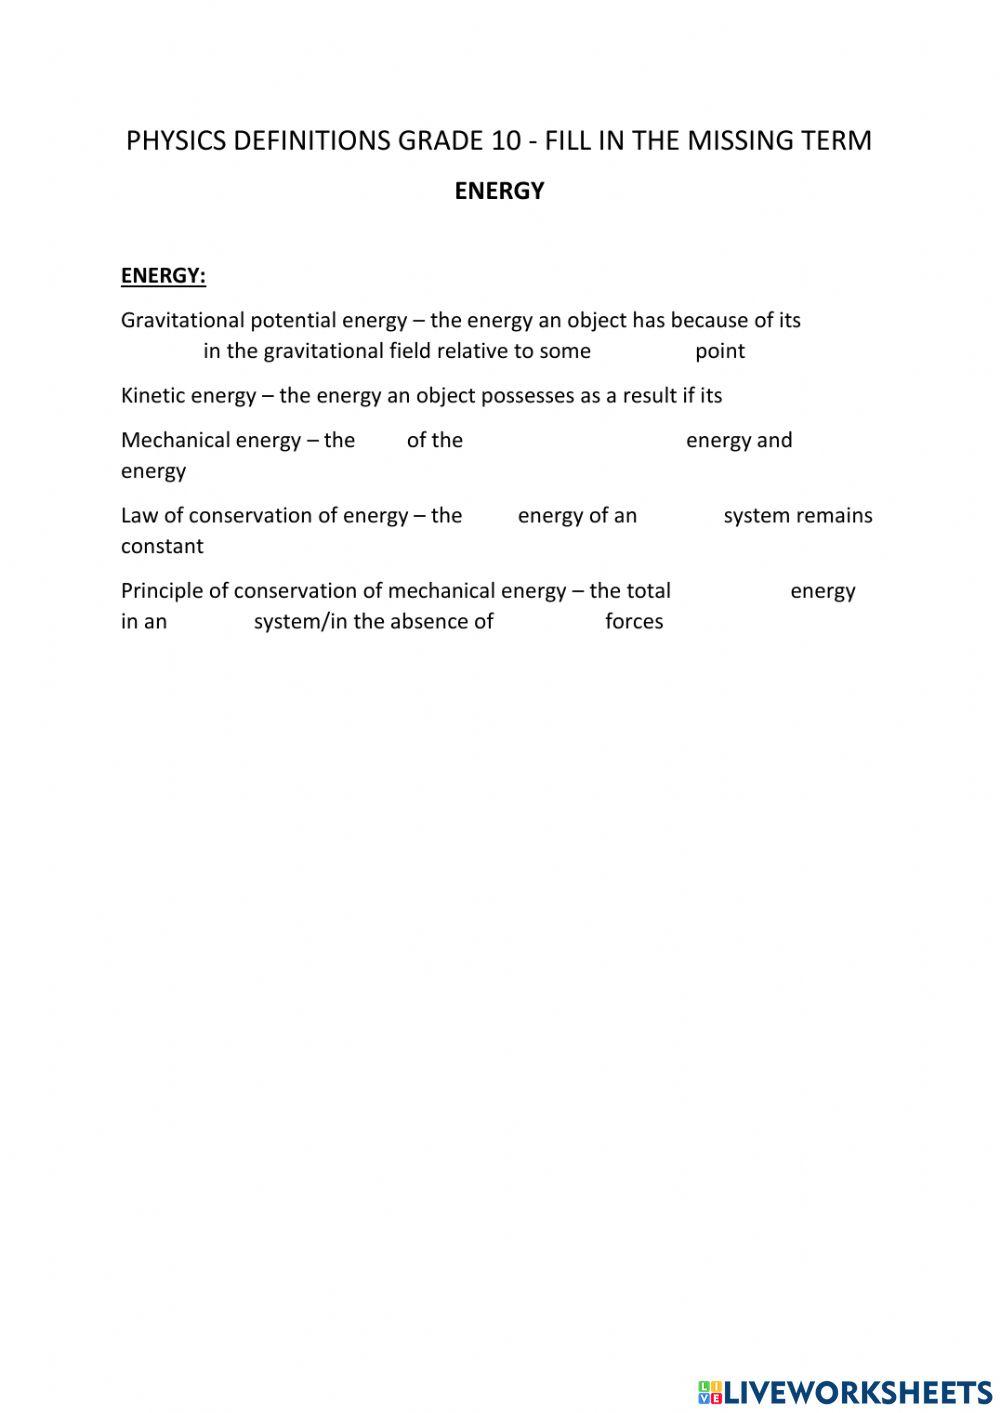 Grade 10 Energy Definitions